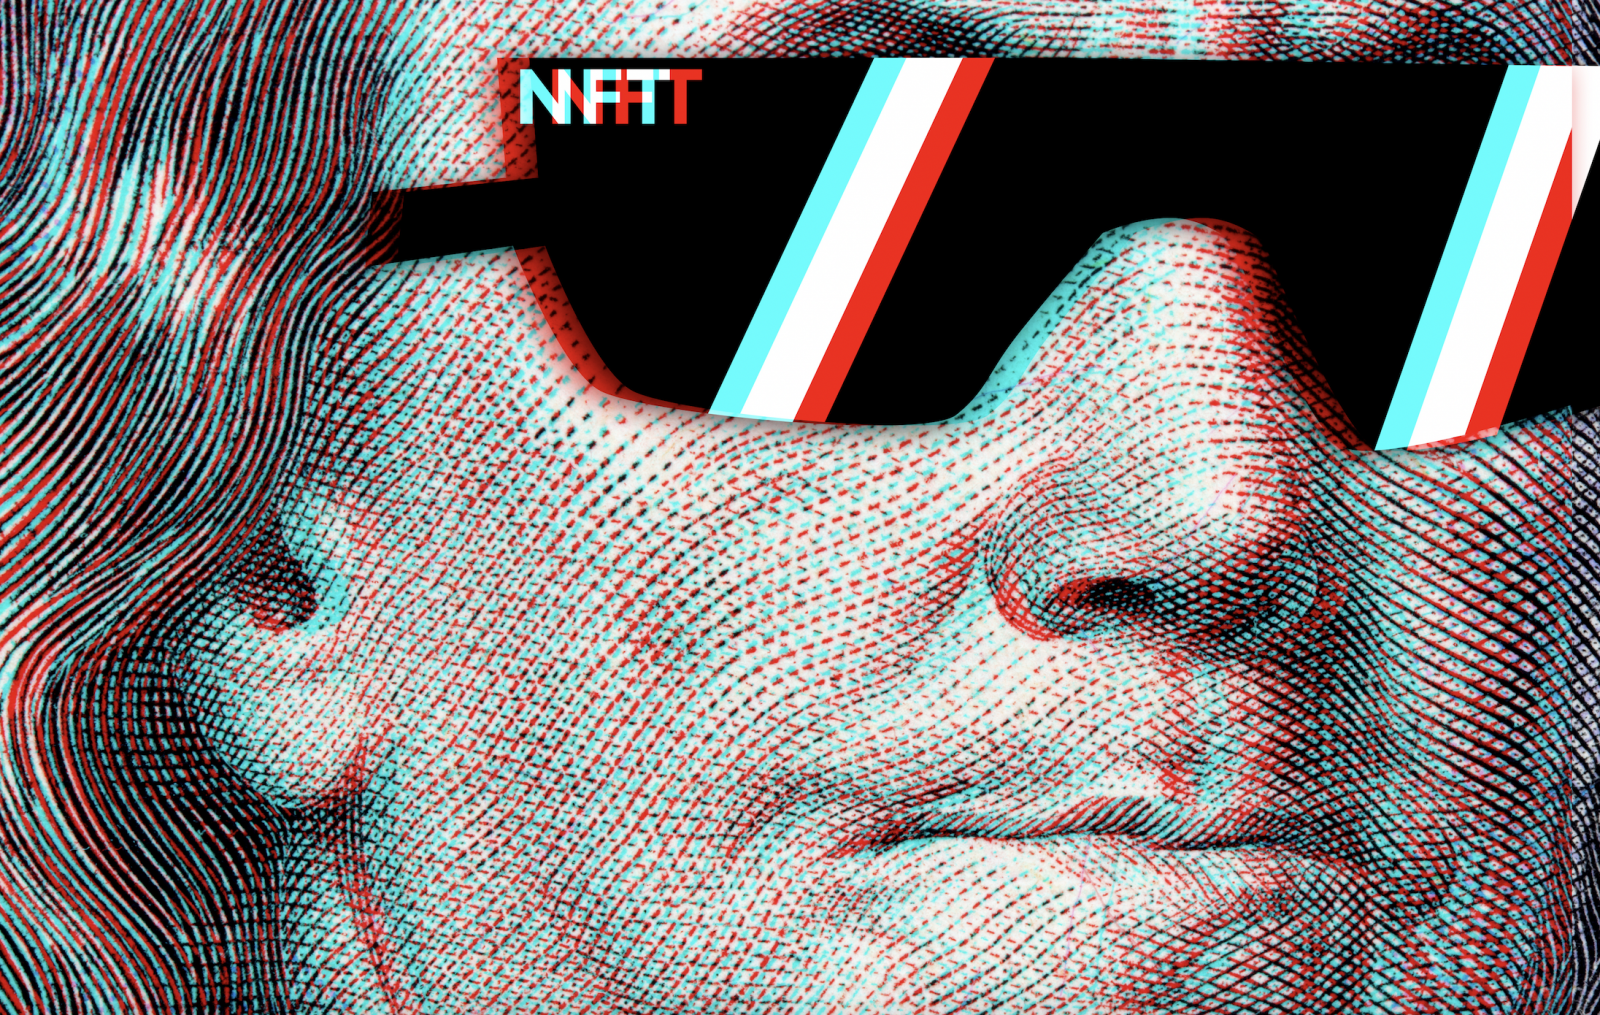 Benjamin Franklin wearing sunglasses that say NFT